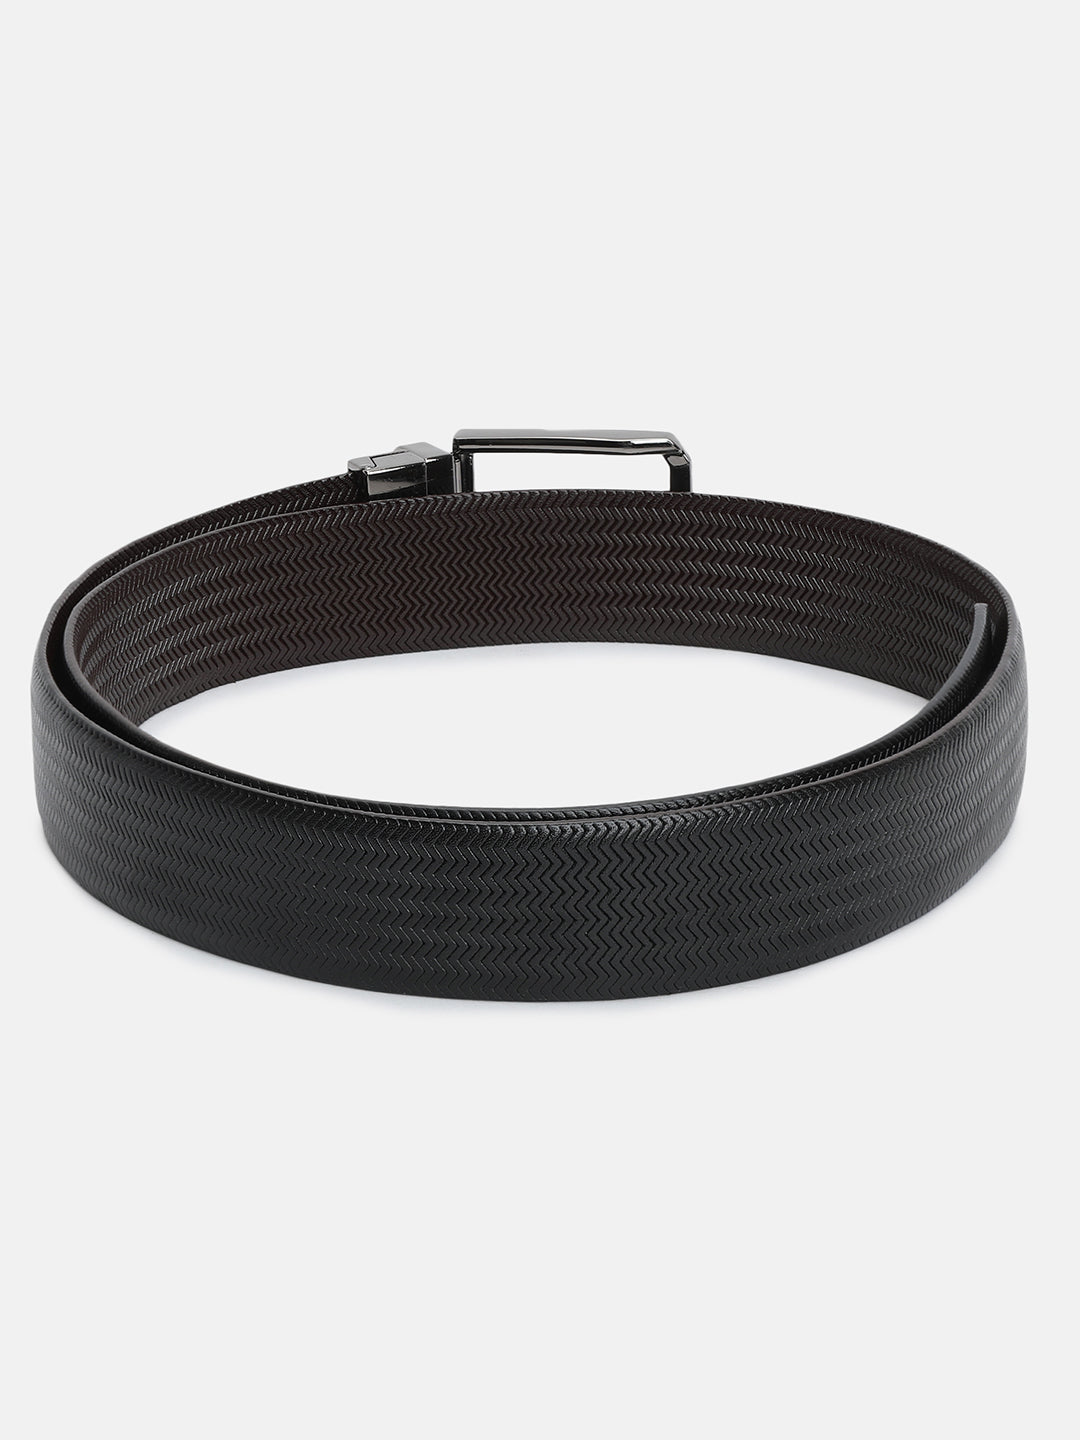 BAGATT Black/Dark Brown Reversible Leather Belt